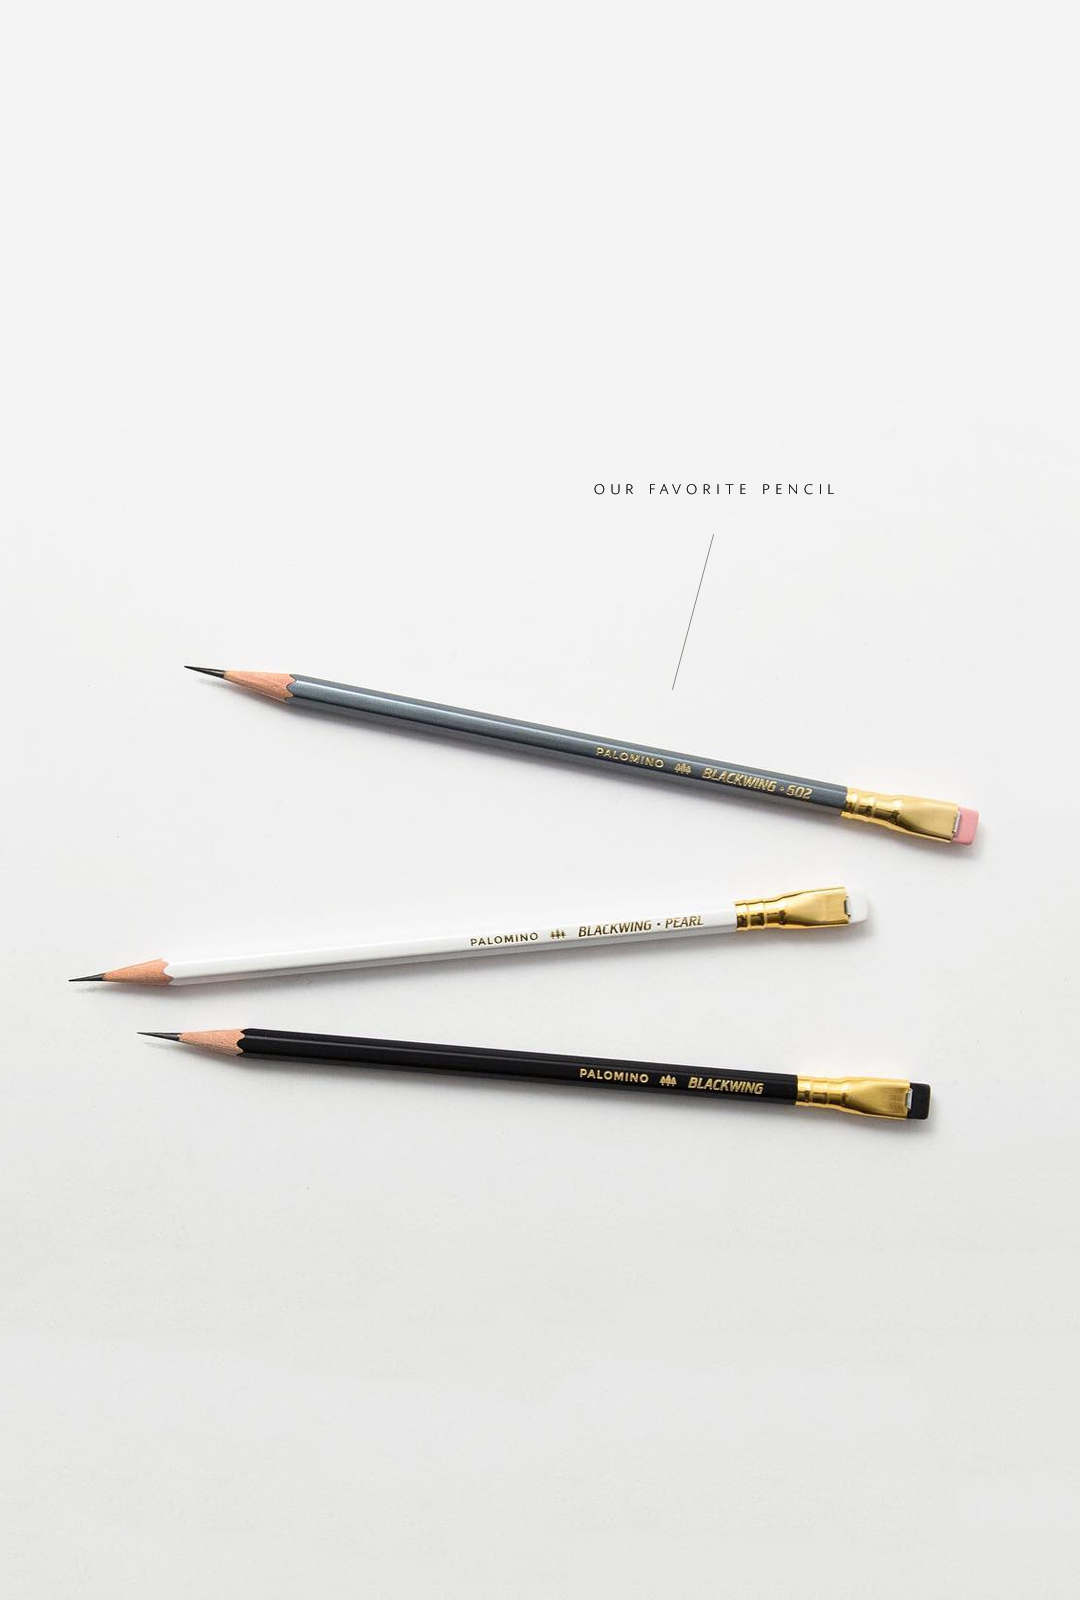 blackwing pencil via besotted blog